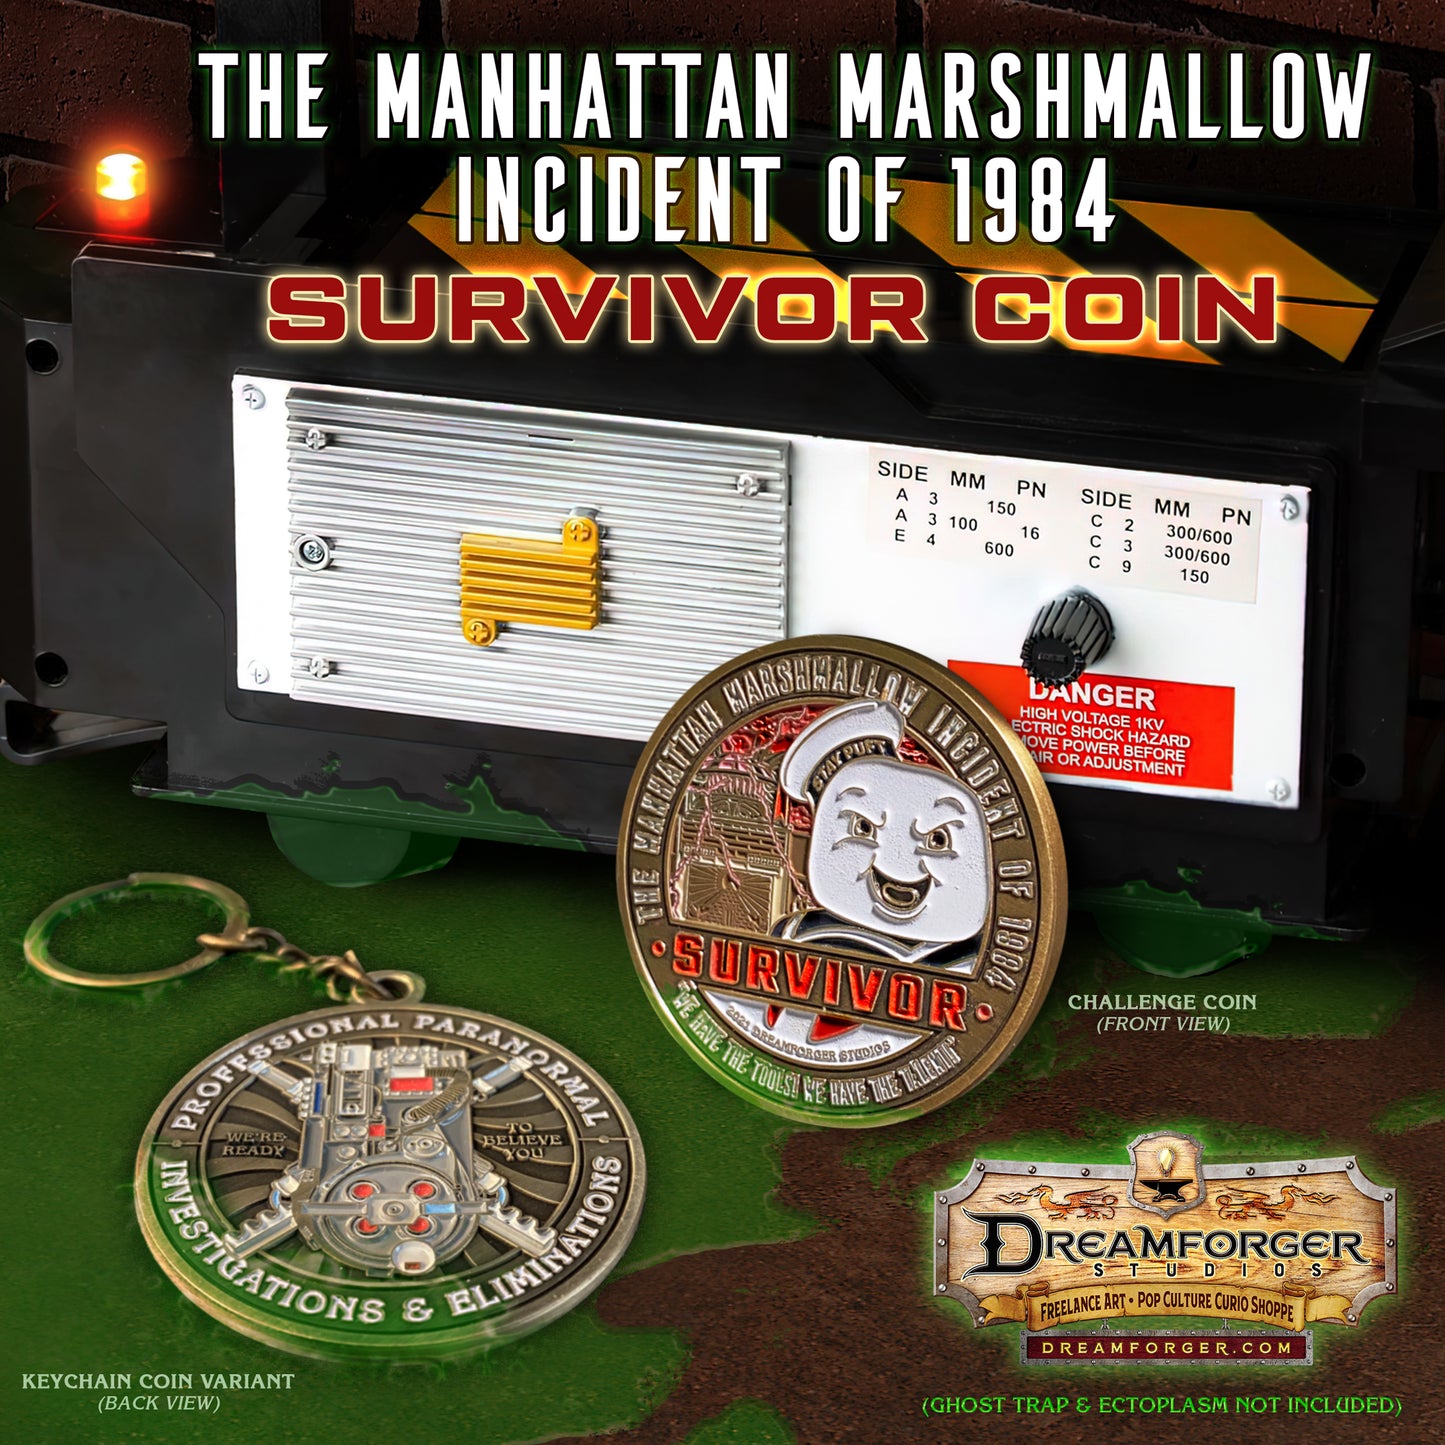 "The Manhattan Marshmallow Incident of 1984 Survivor" Metal Challenge Coin